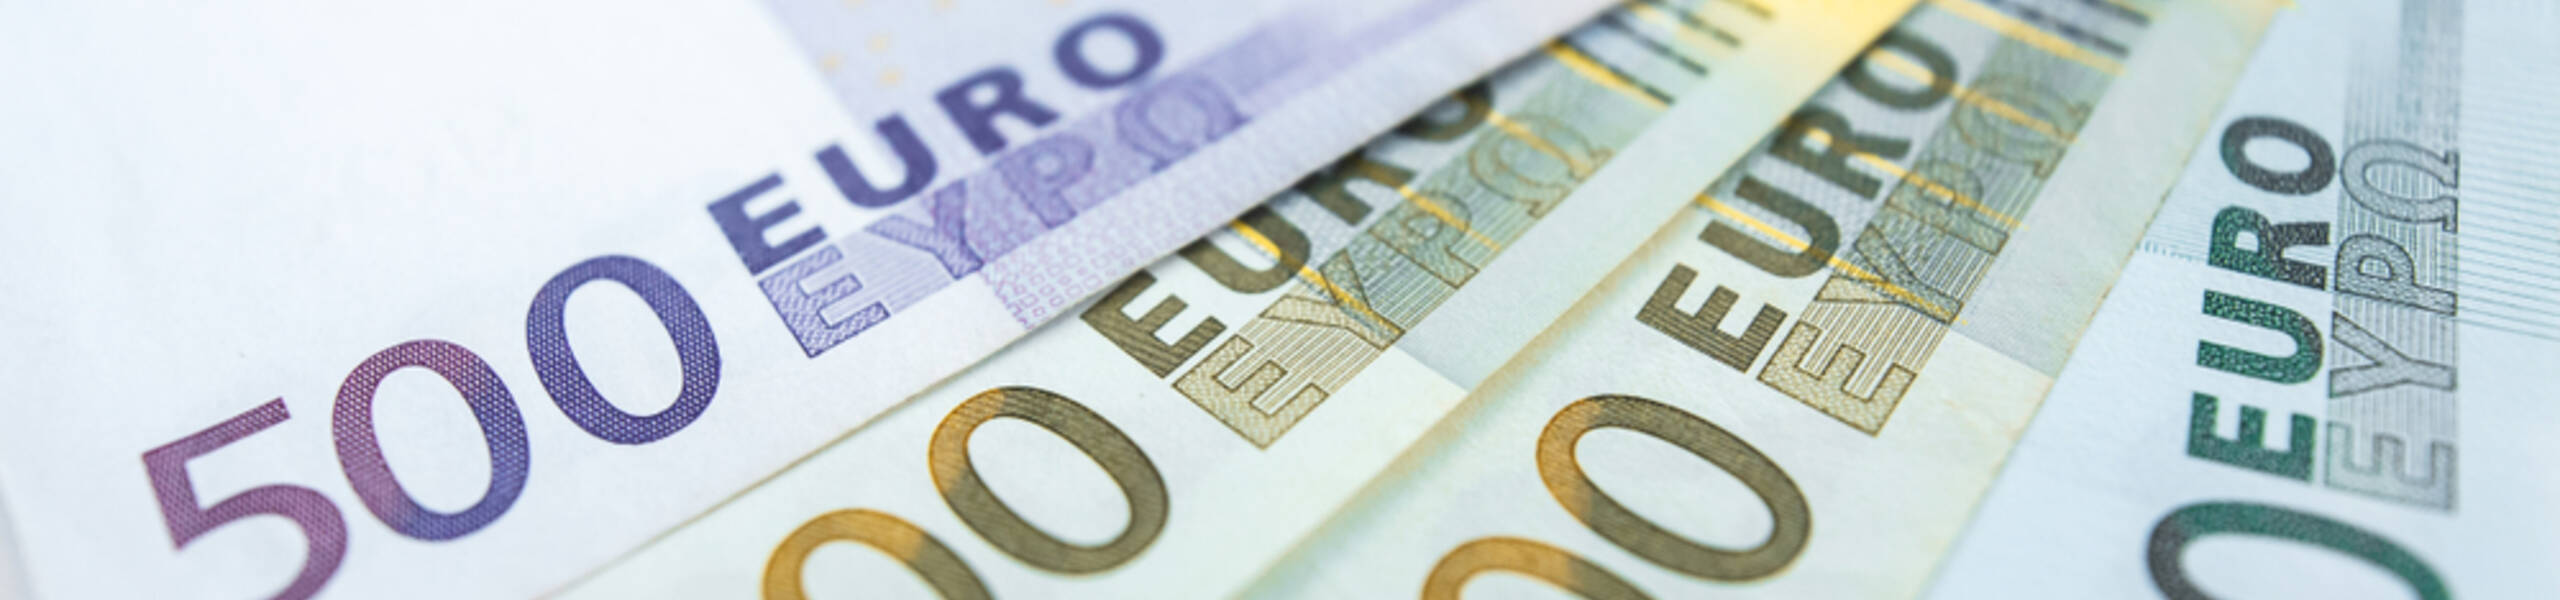 تحليل زوج اليورو دولار ليوم 4-6-2020